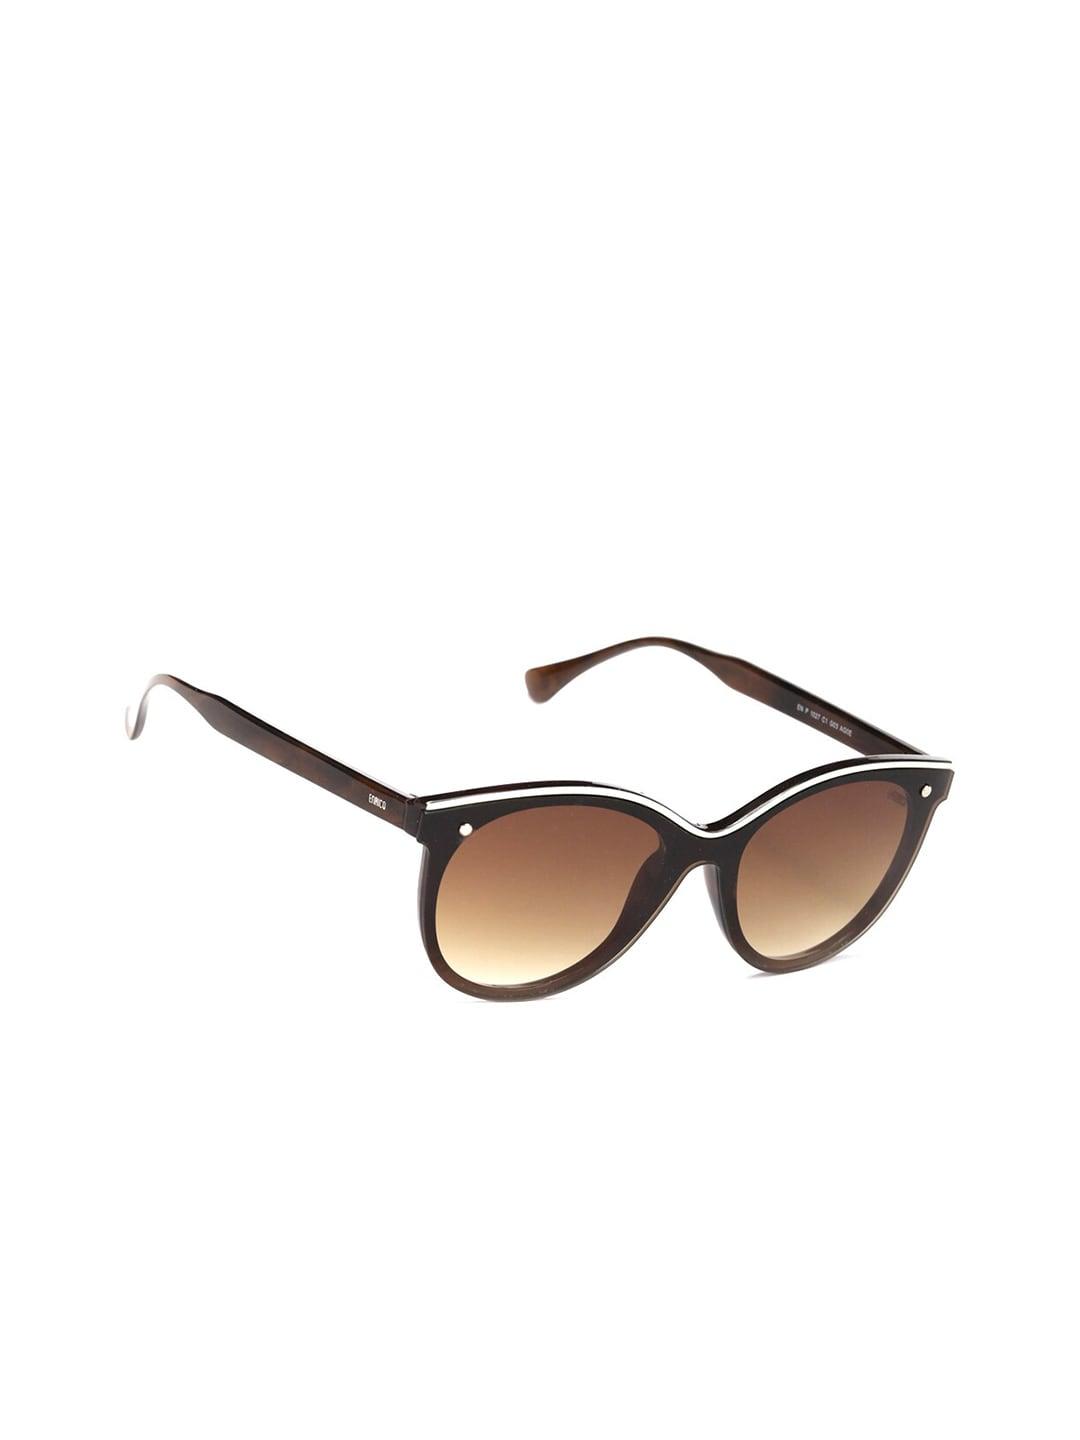 enrico women brown cateye sunglasses